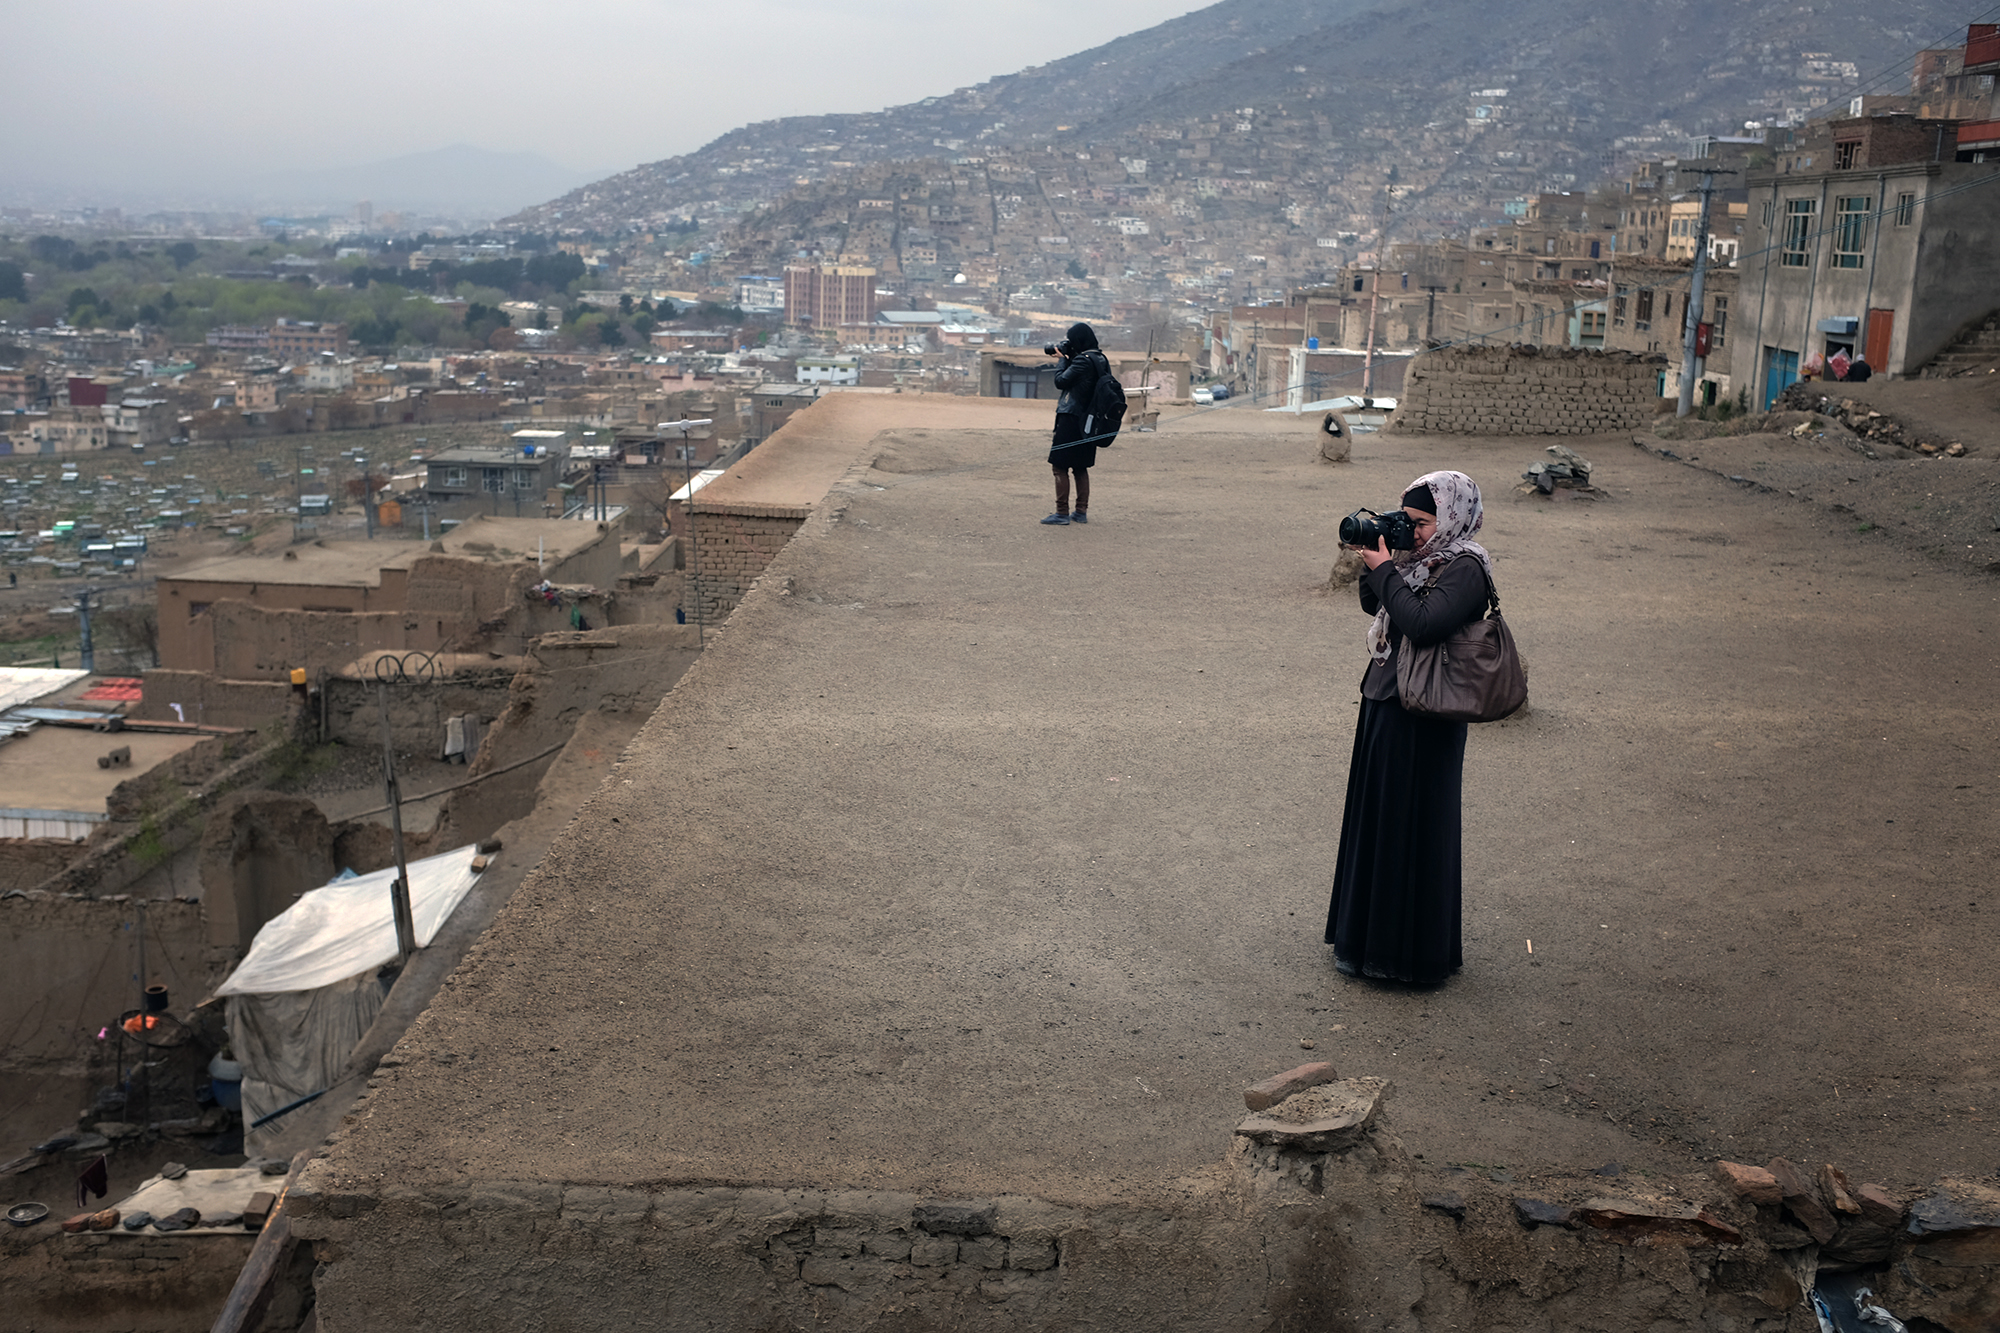 Kabul Photojournalism Mentorship